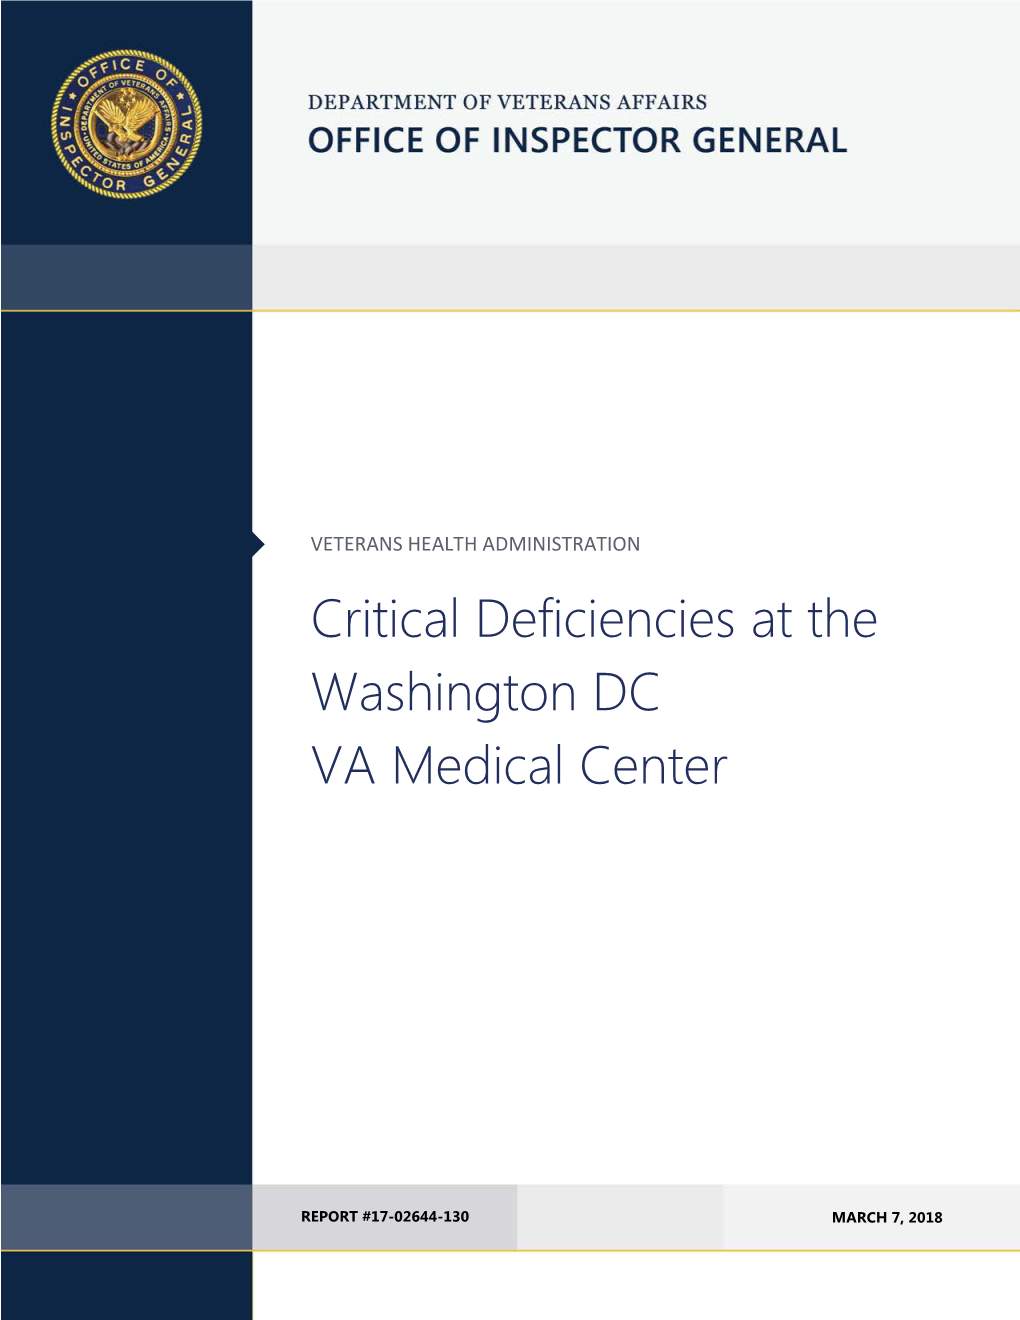 Critical Deficiencies at the Washington DC VA Medical Center